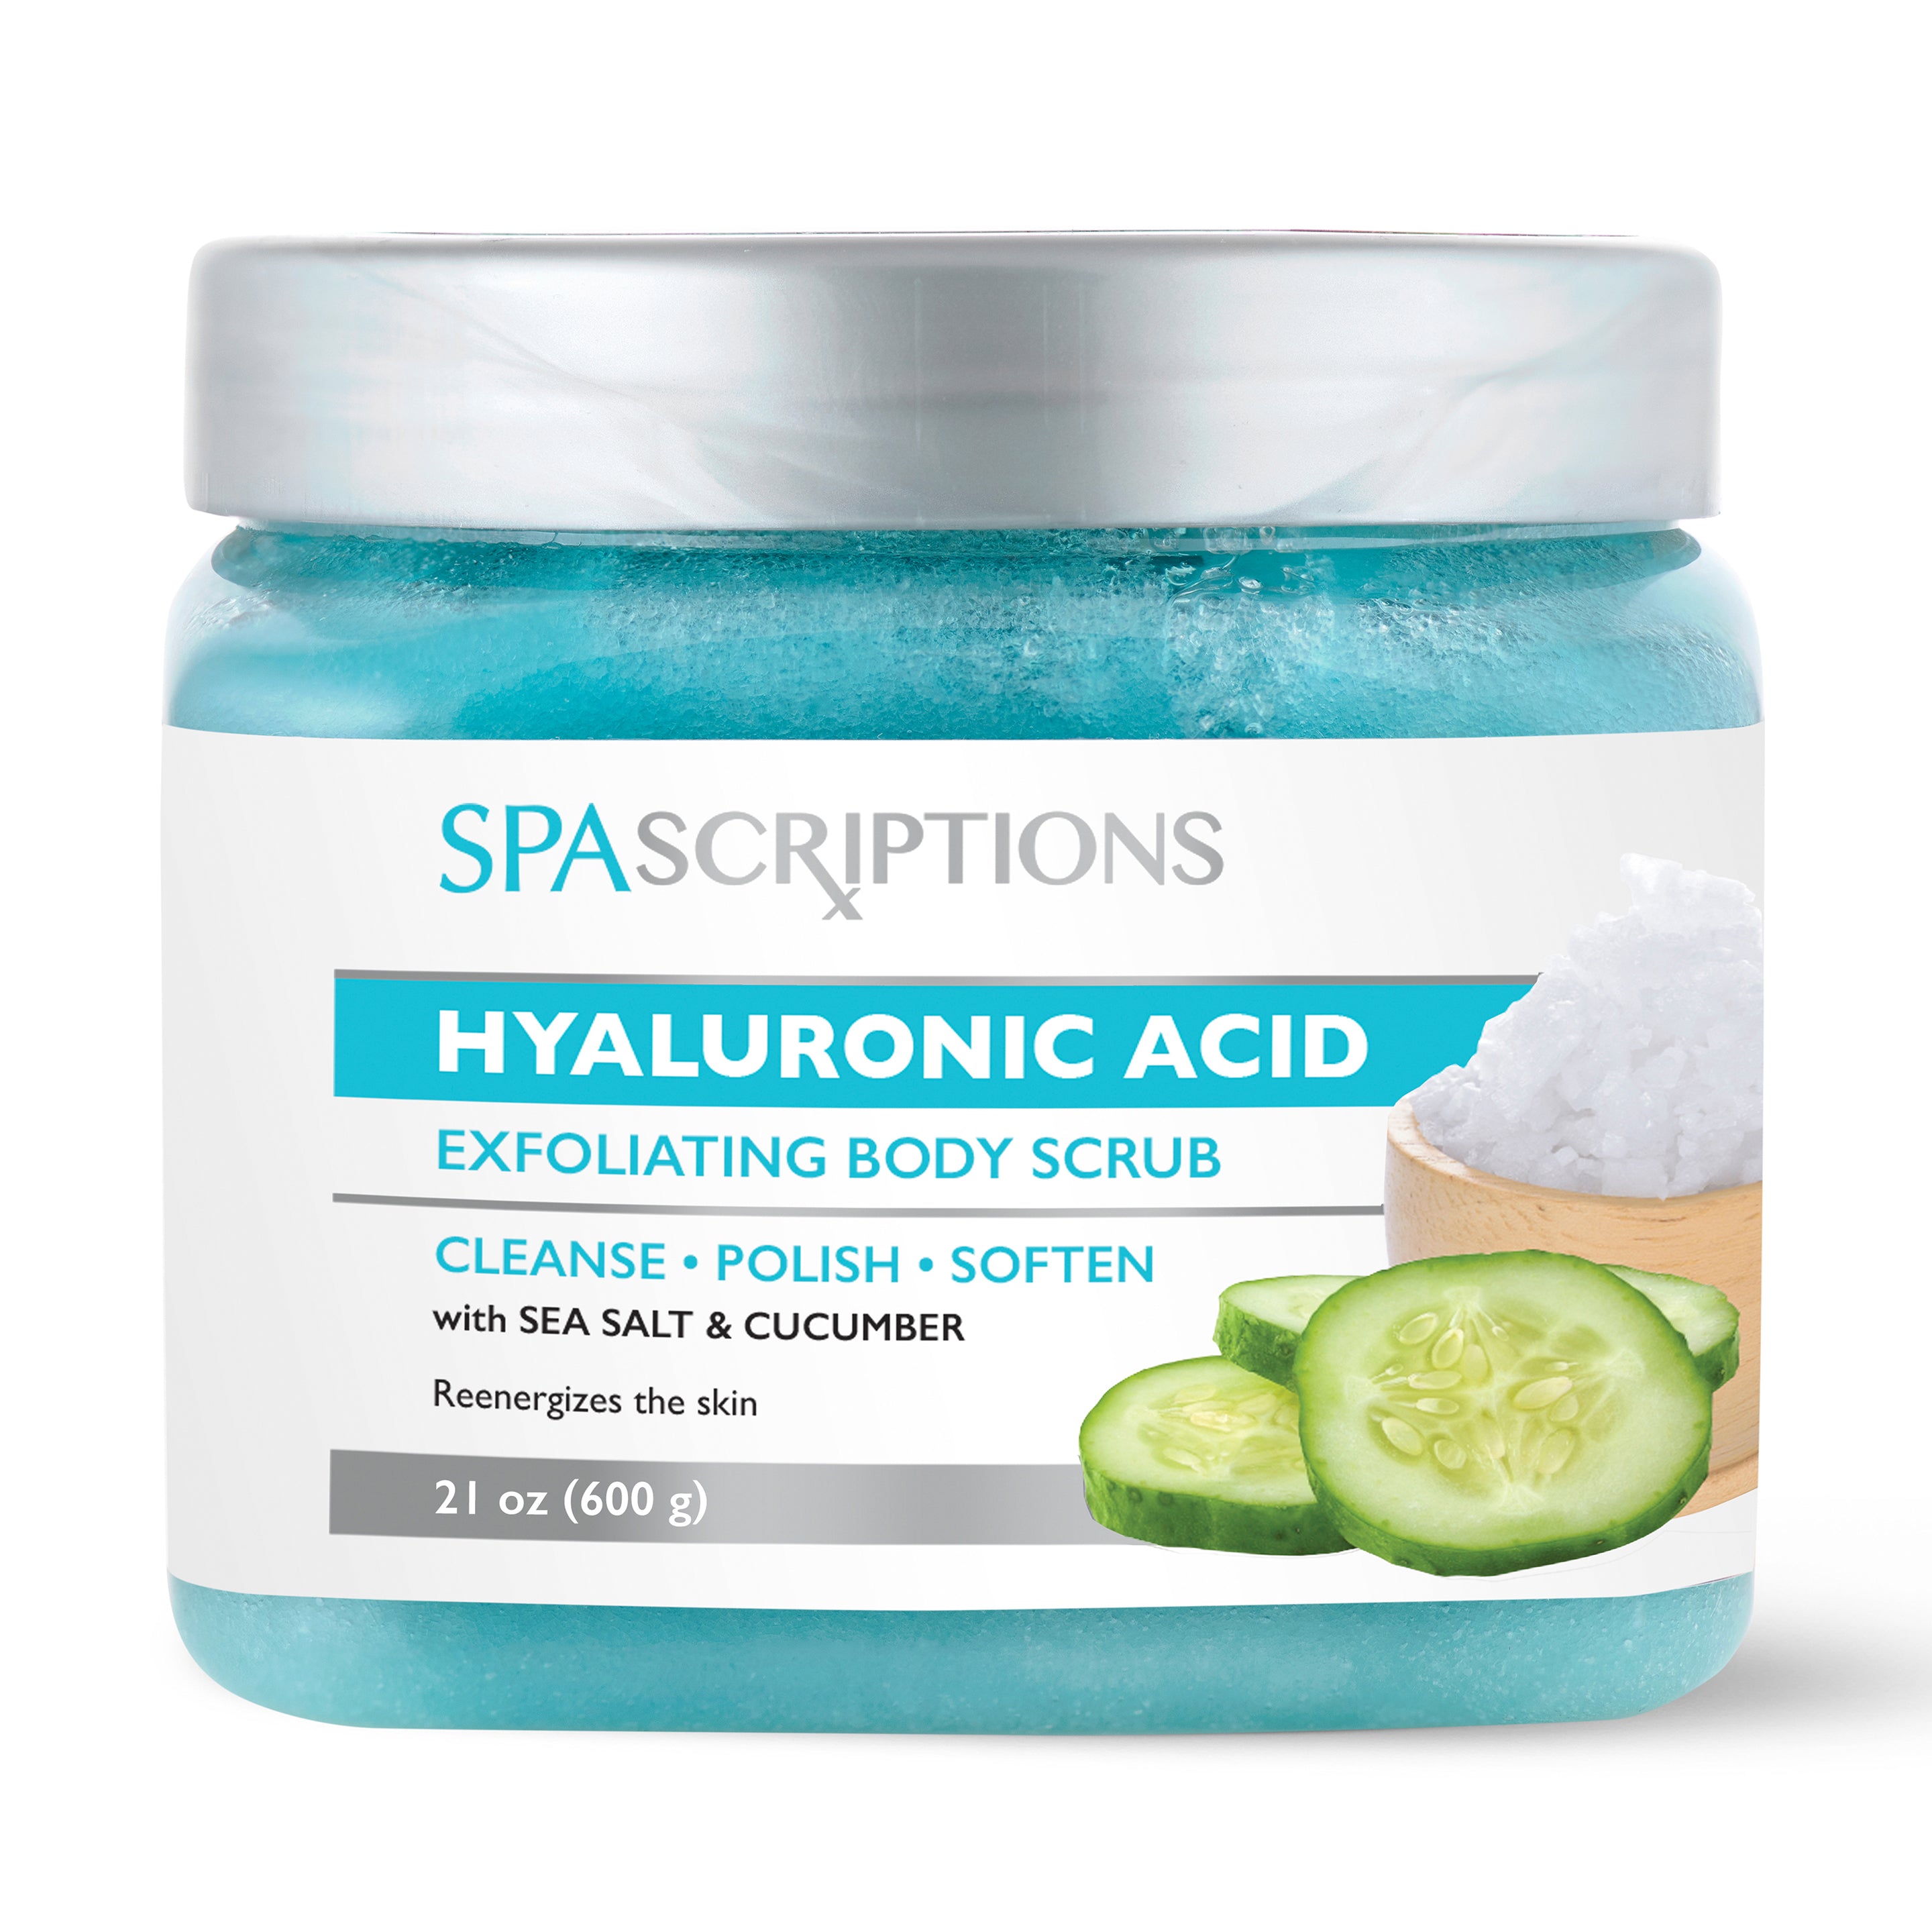 Hyaluronic Acid Exfoliating Body Scrub